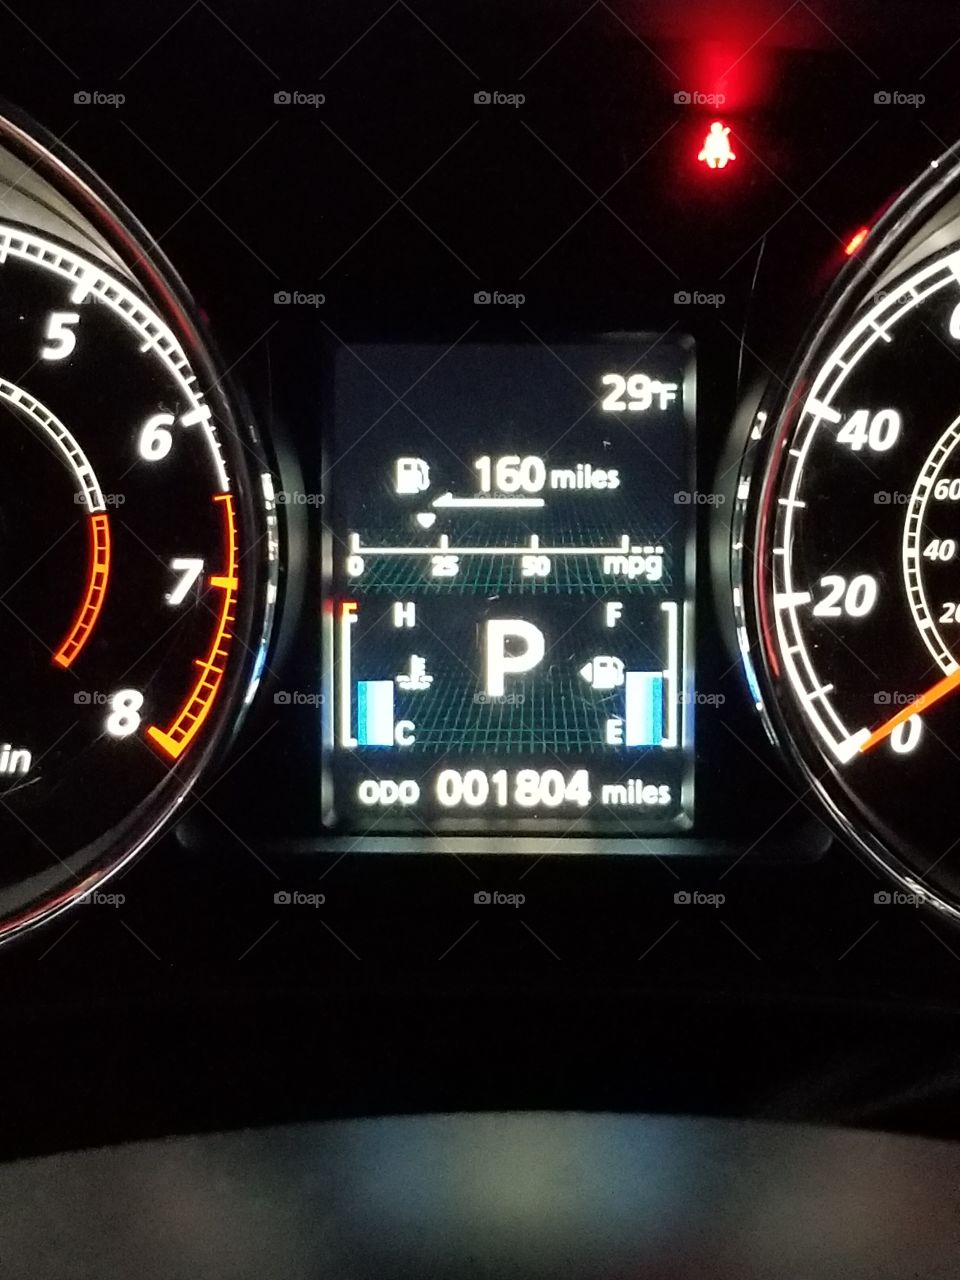 To cold for Florida. Mitsubishi Outlander Sport